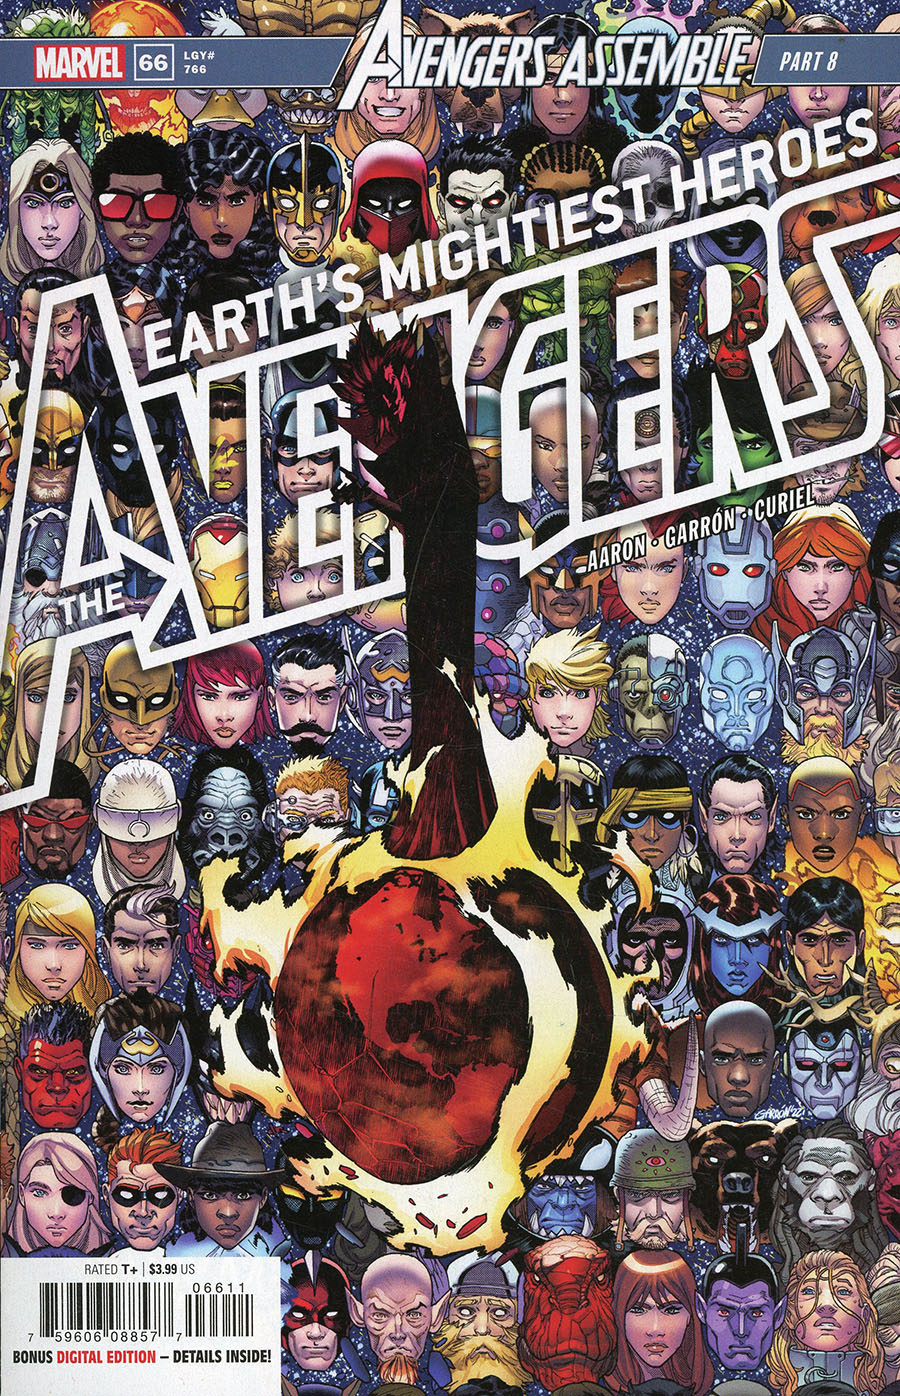 Avengers Vol 7 #66 Cover A Regular Javier Garron Cover (Avengers Assemble Part 8)